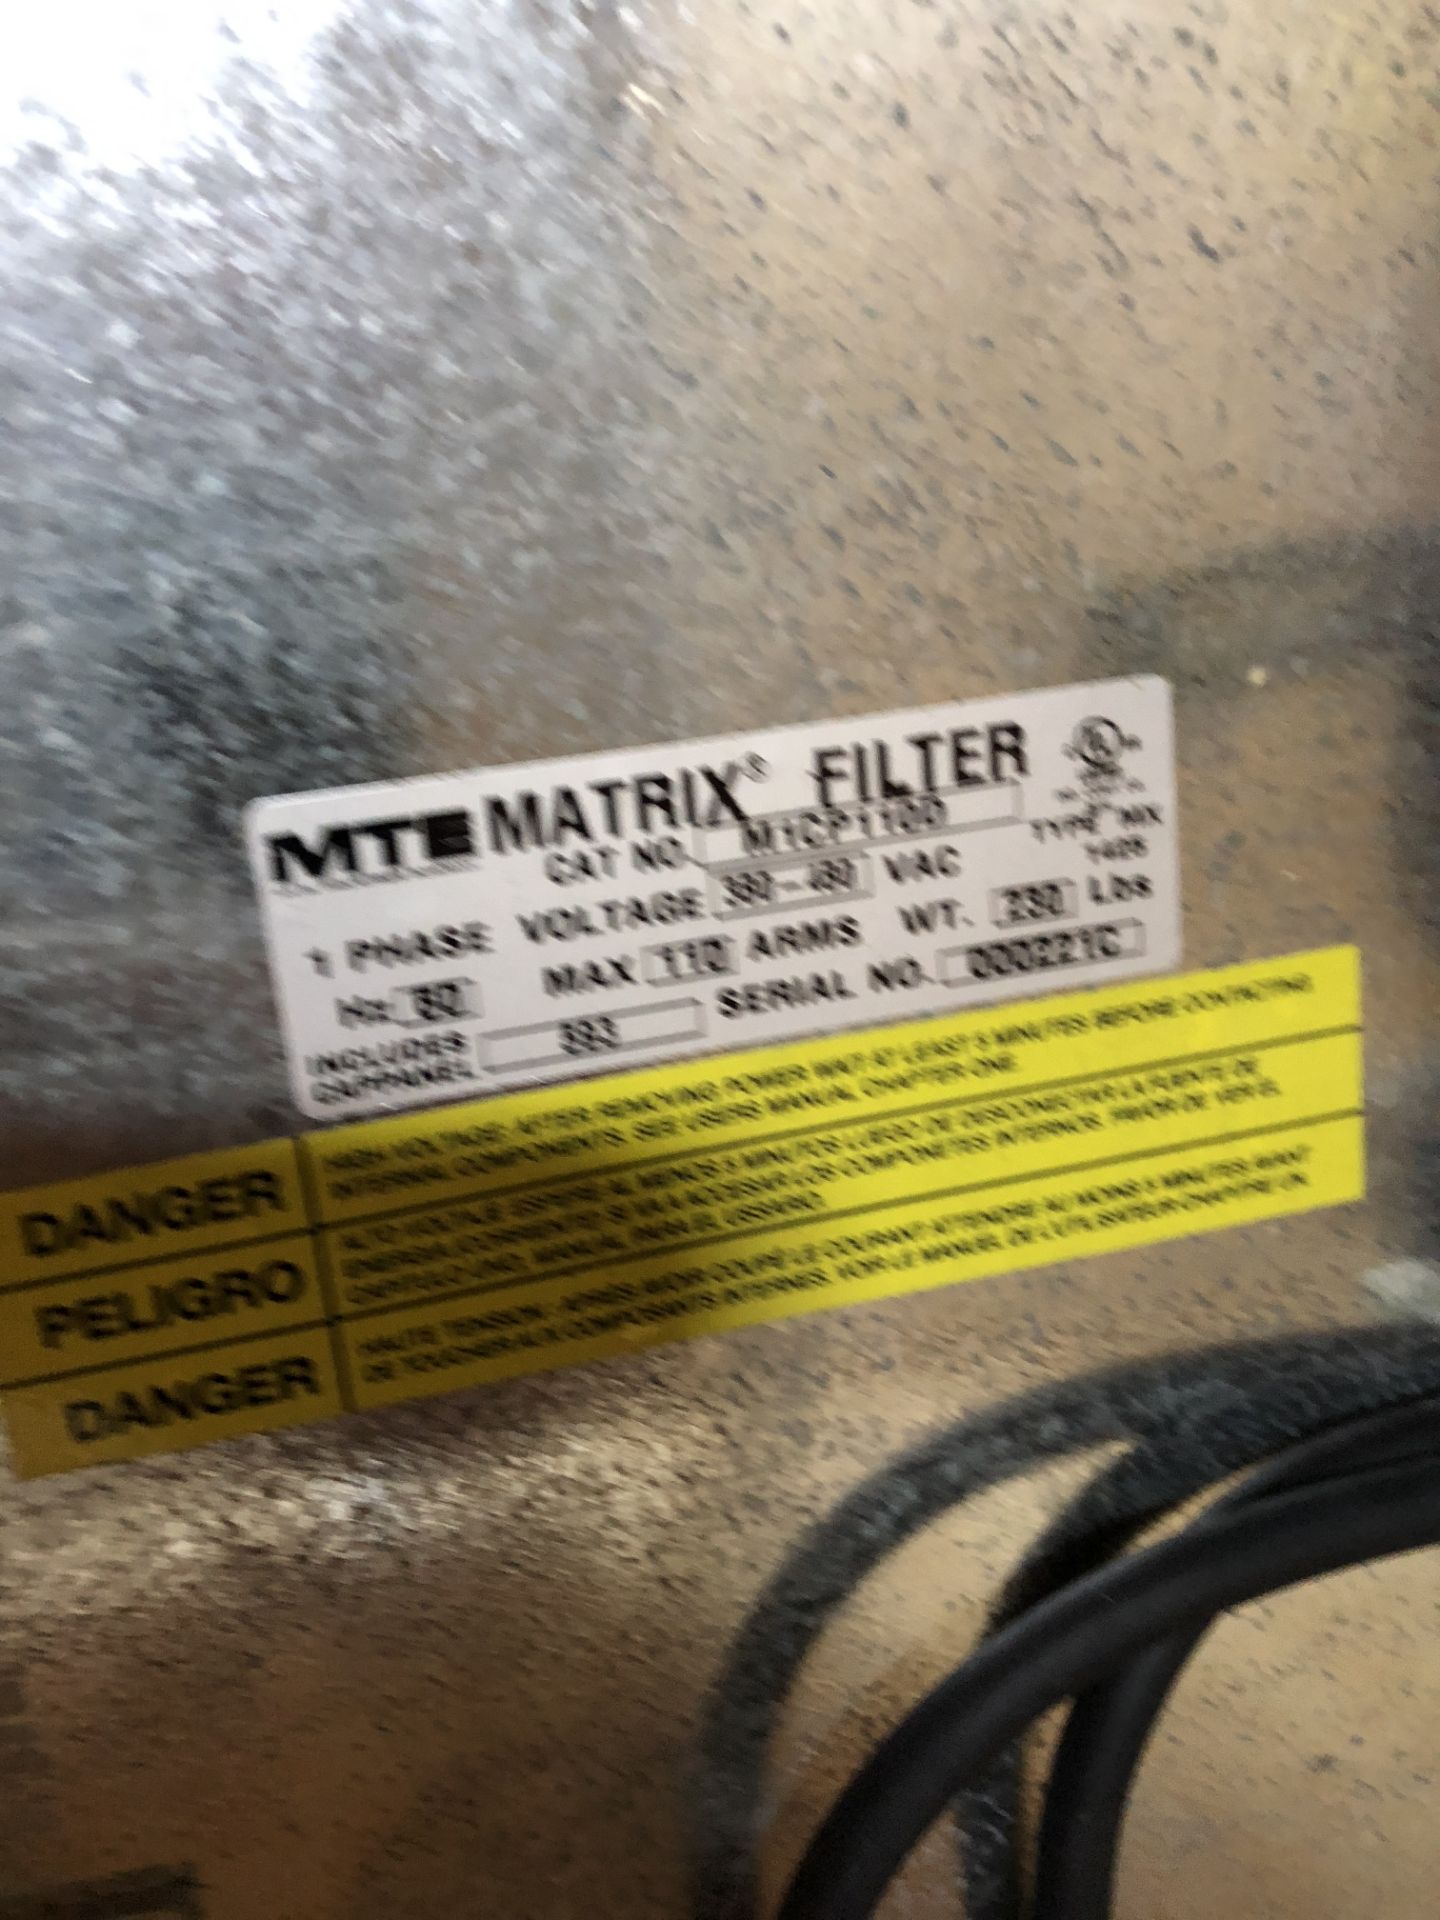 MATRIX FILTER 1/PH/ 480V/040HP/110A OPEN - Image 3 of 3